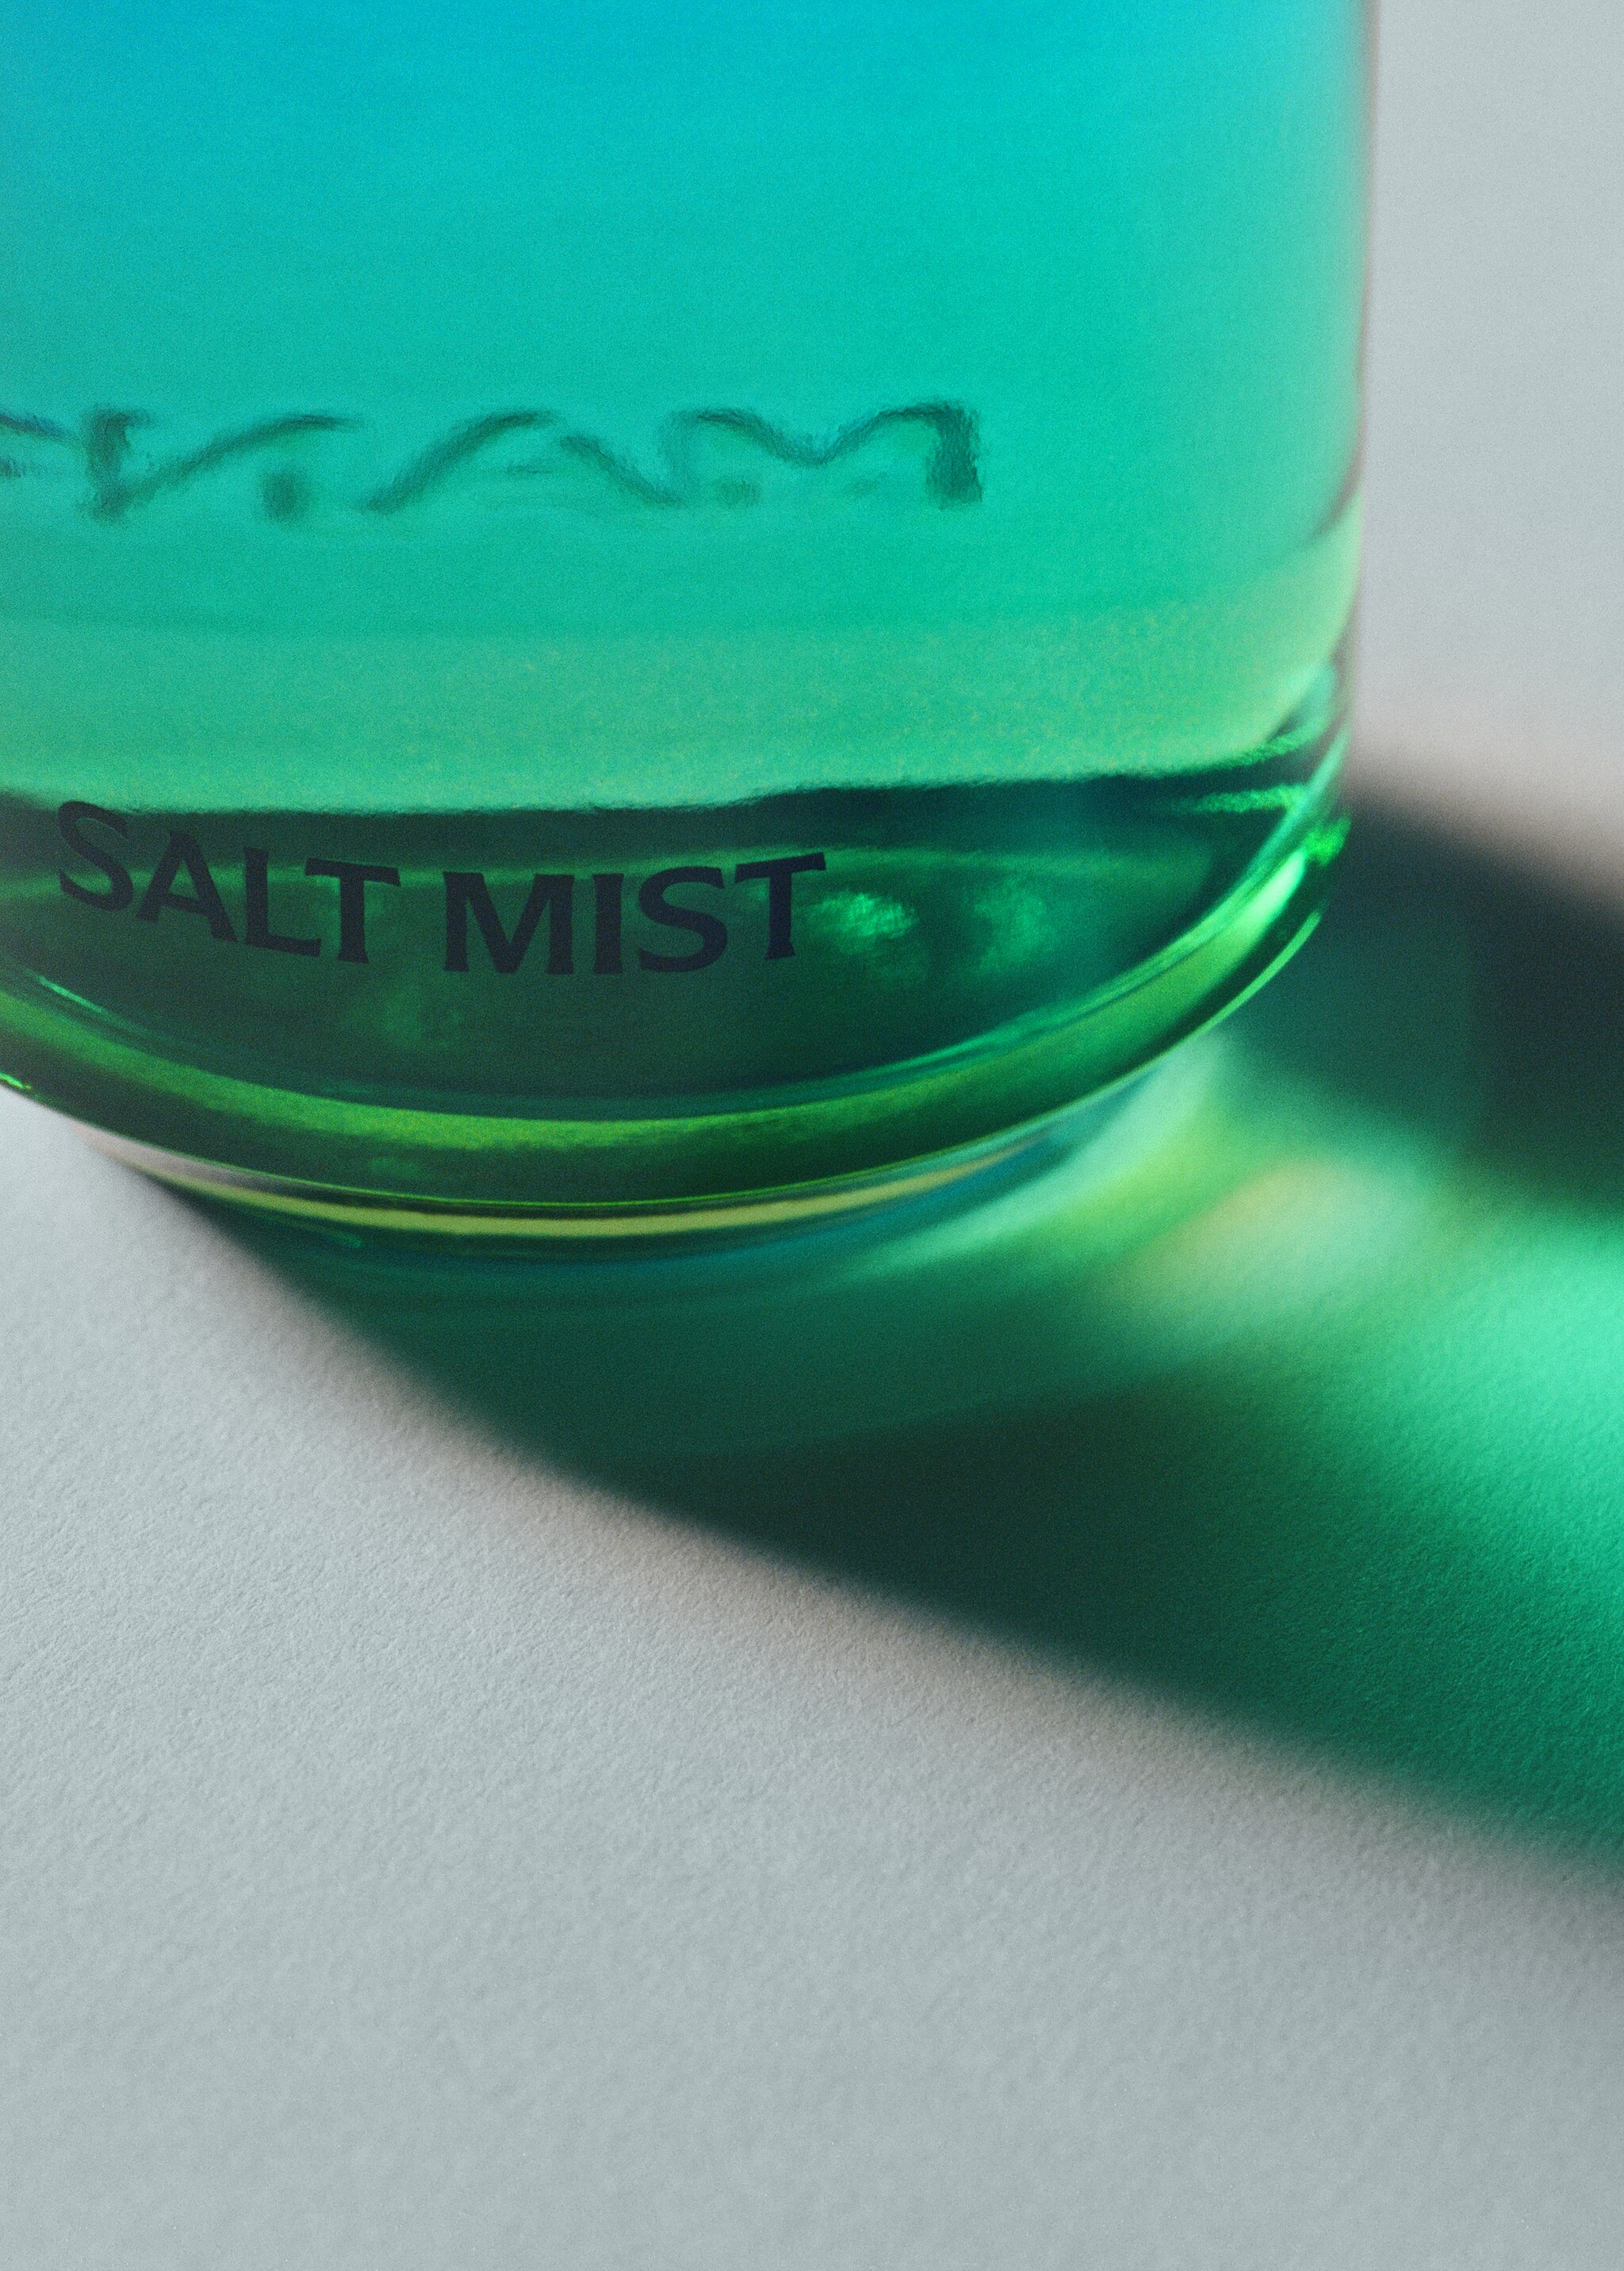 Salt Mist Fragrance 100ml - Деталь изделия 2